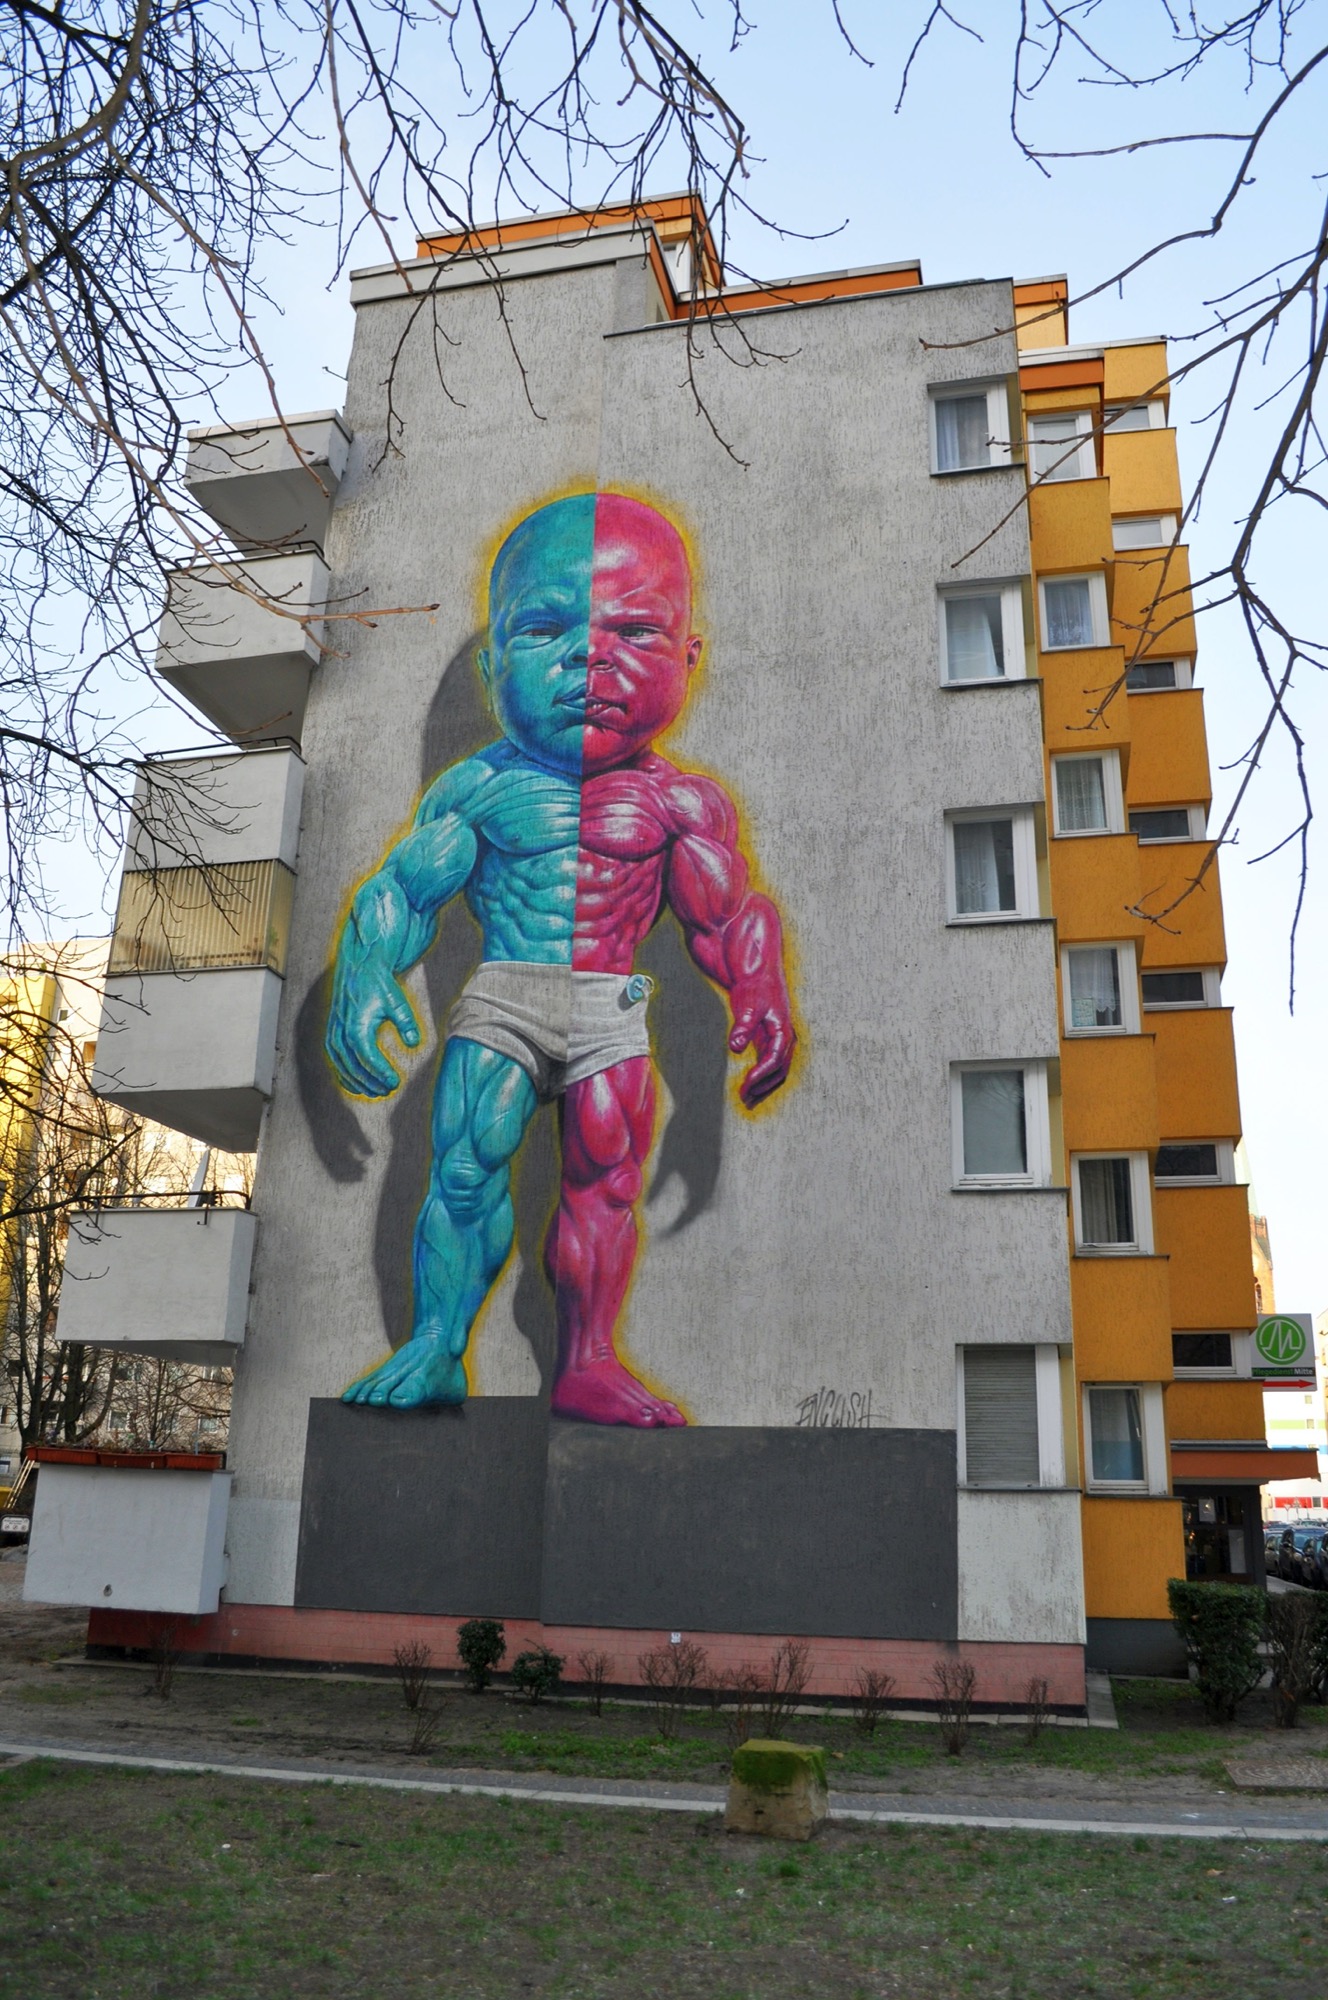 Graffiti 4232 Temper Tot by the artist Ron English captured by elettrotajik in Berlin Germany